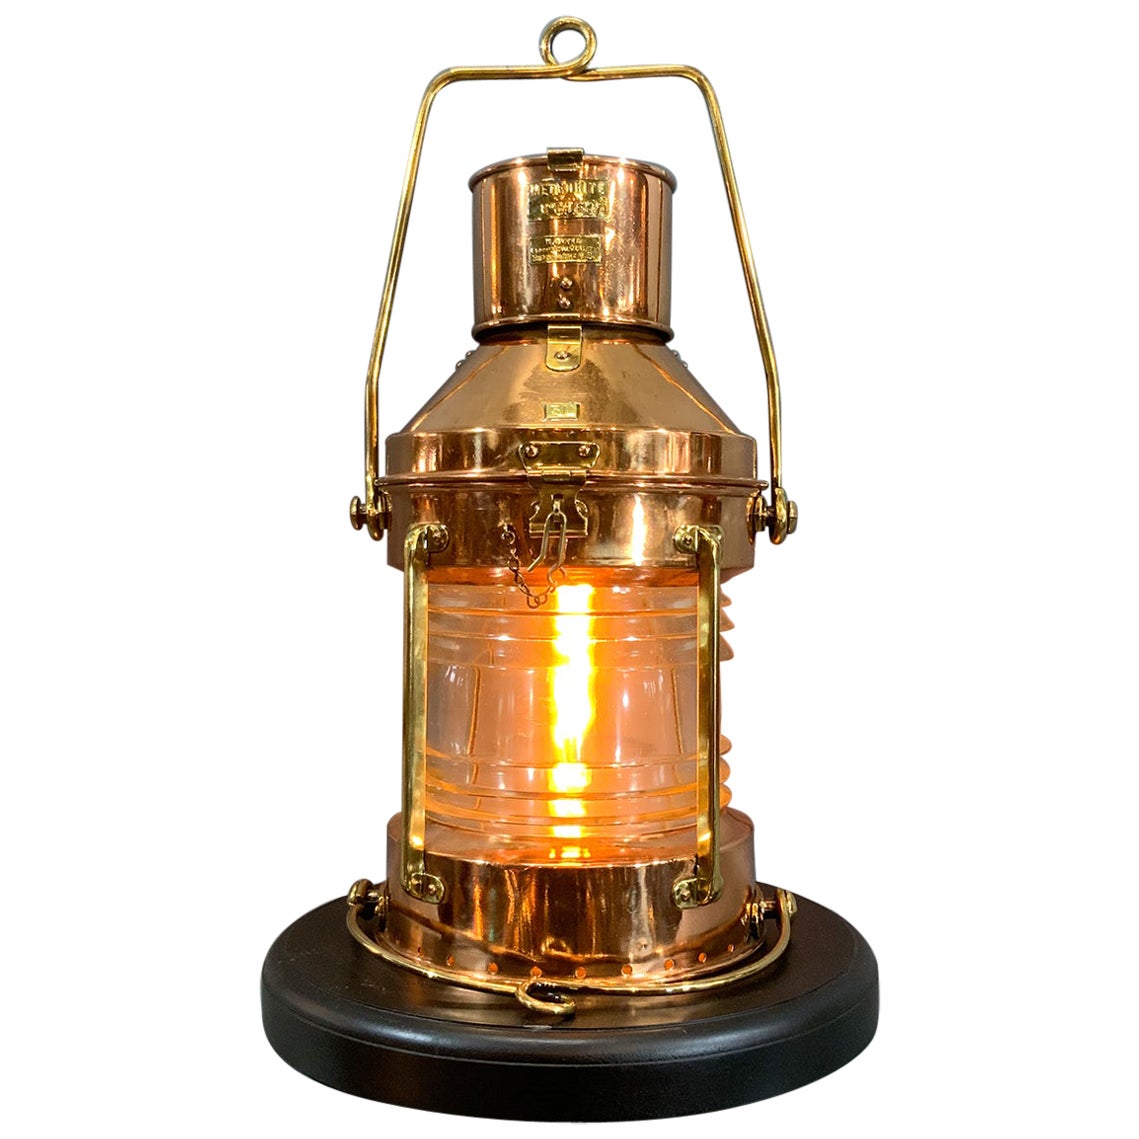 Copper Ship’s Lantern by English Maker Meteorite